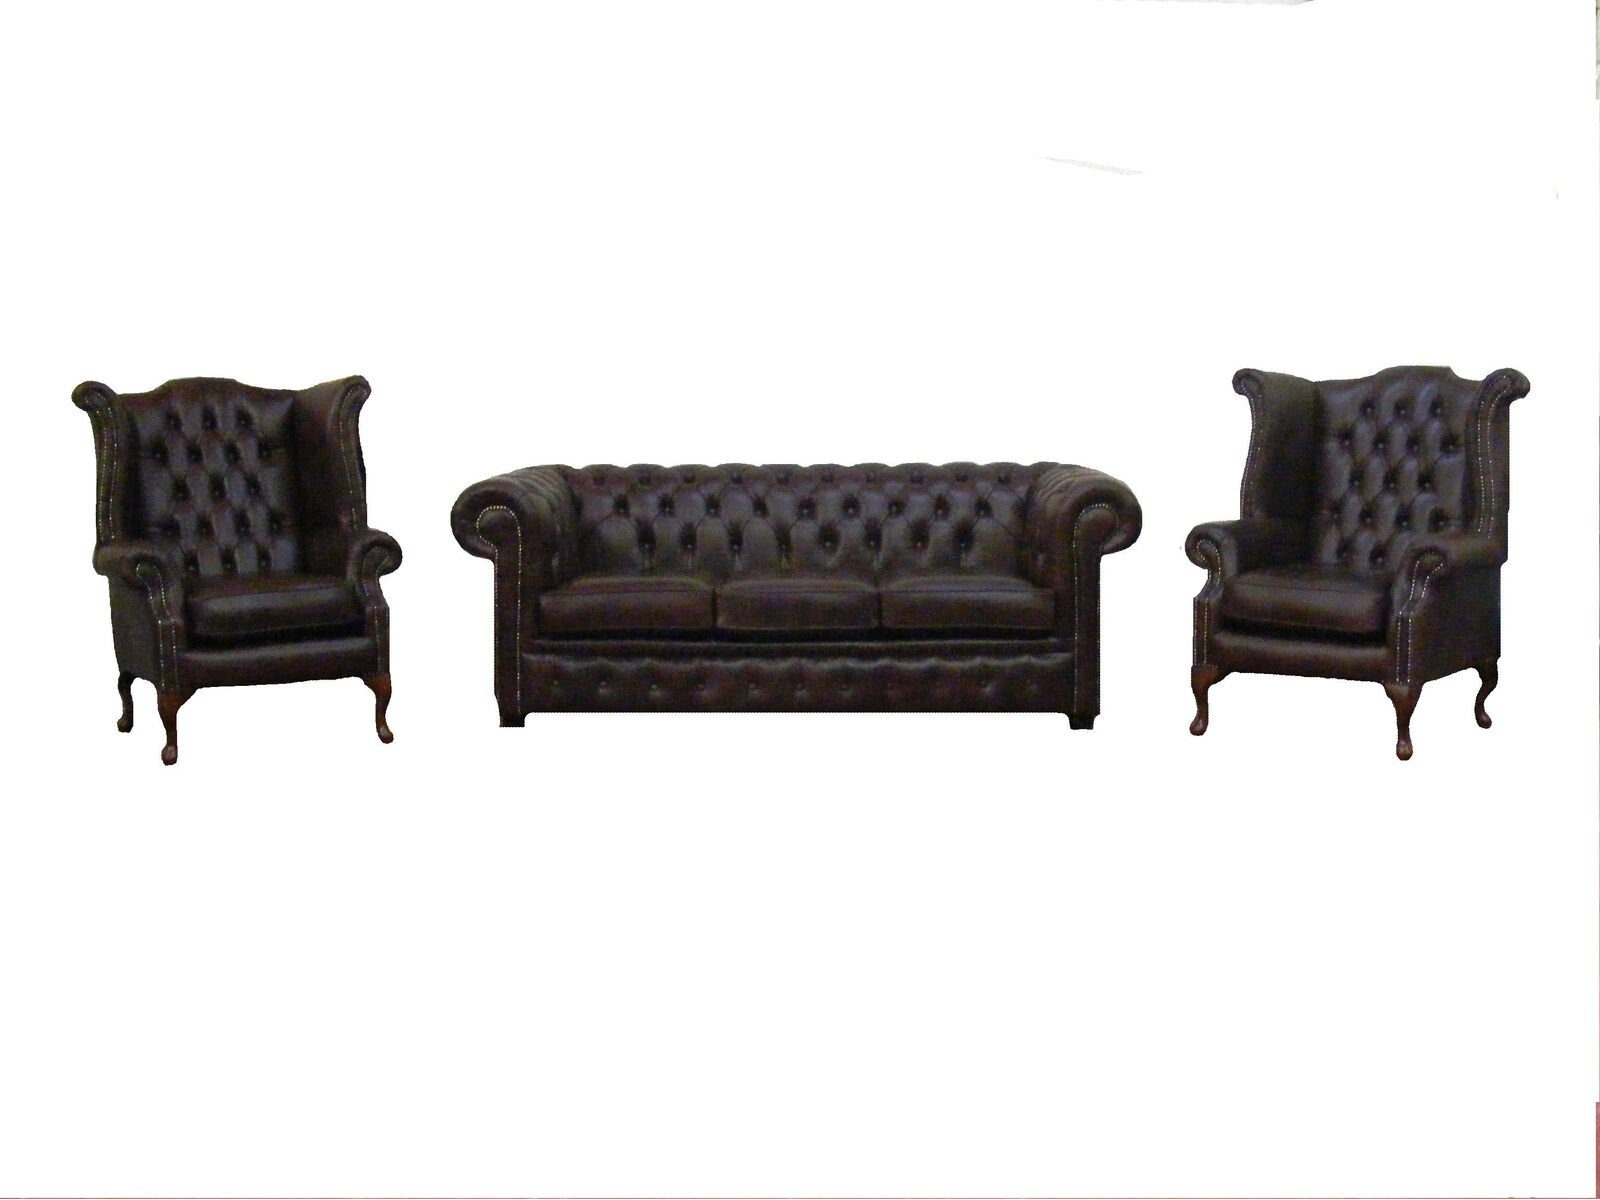 JVmoebel Sofa Luxus schwarze Chesterfield Sofagarnitur 3+1+1 Sitzer Neu, Made in Europe